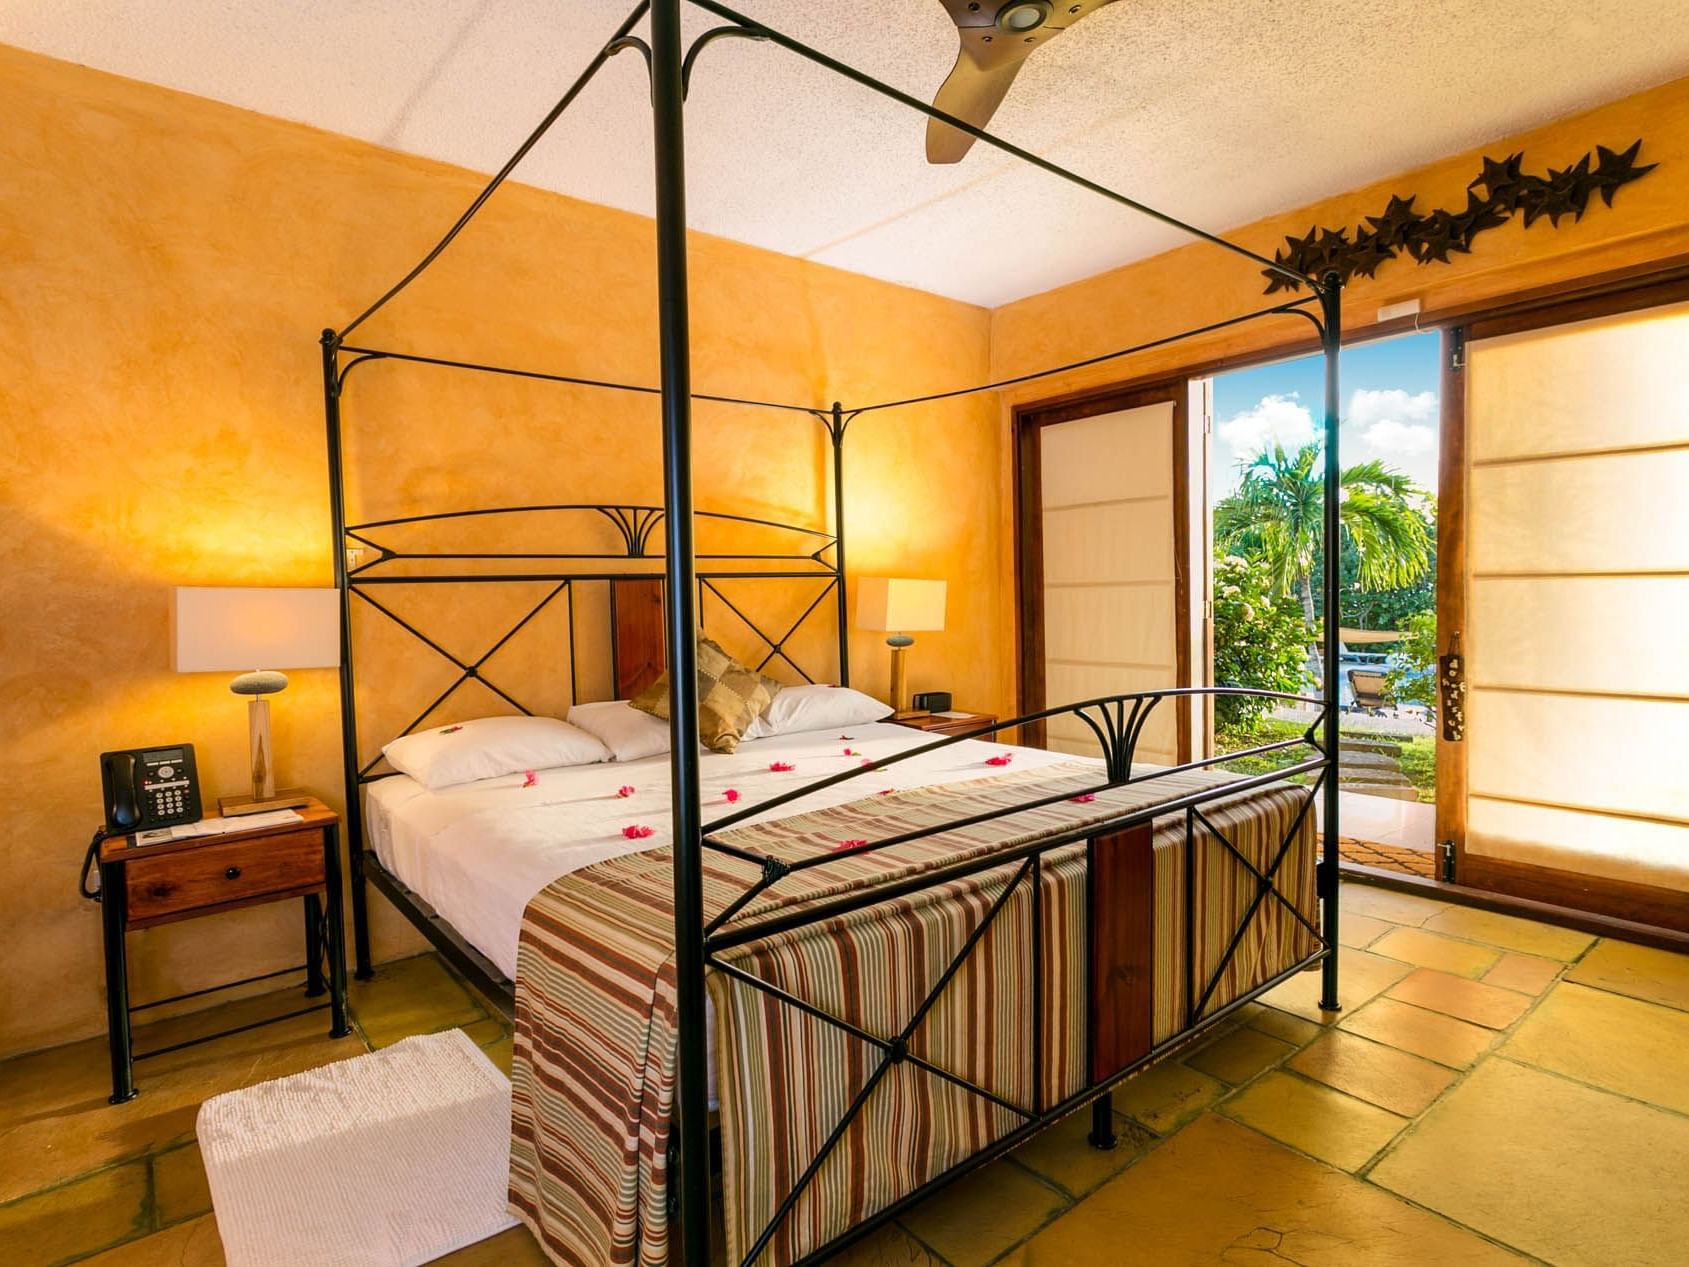 Bedroom arrangement in a Villa at True Blue Bay Hotel